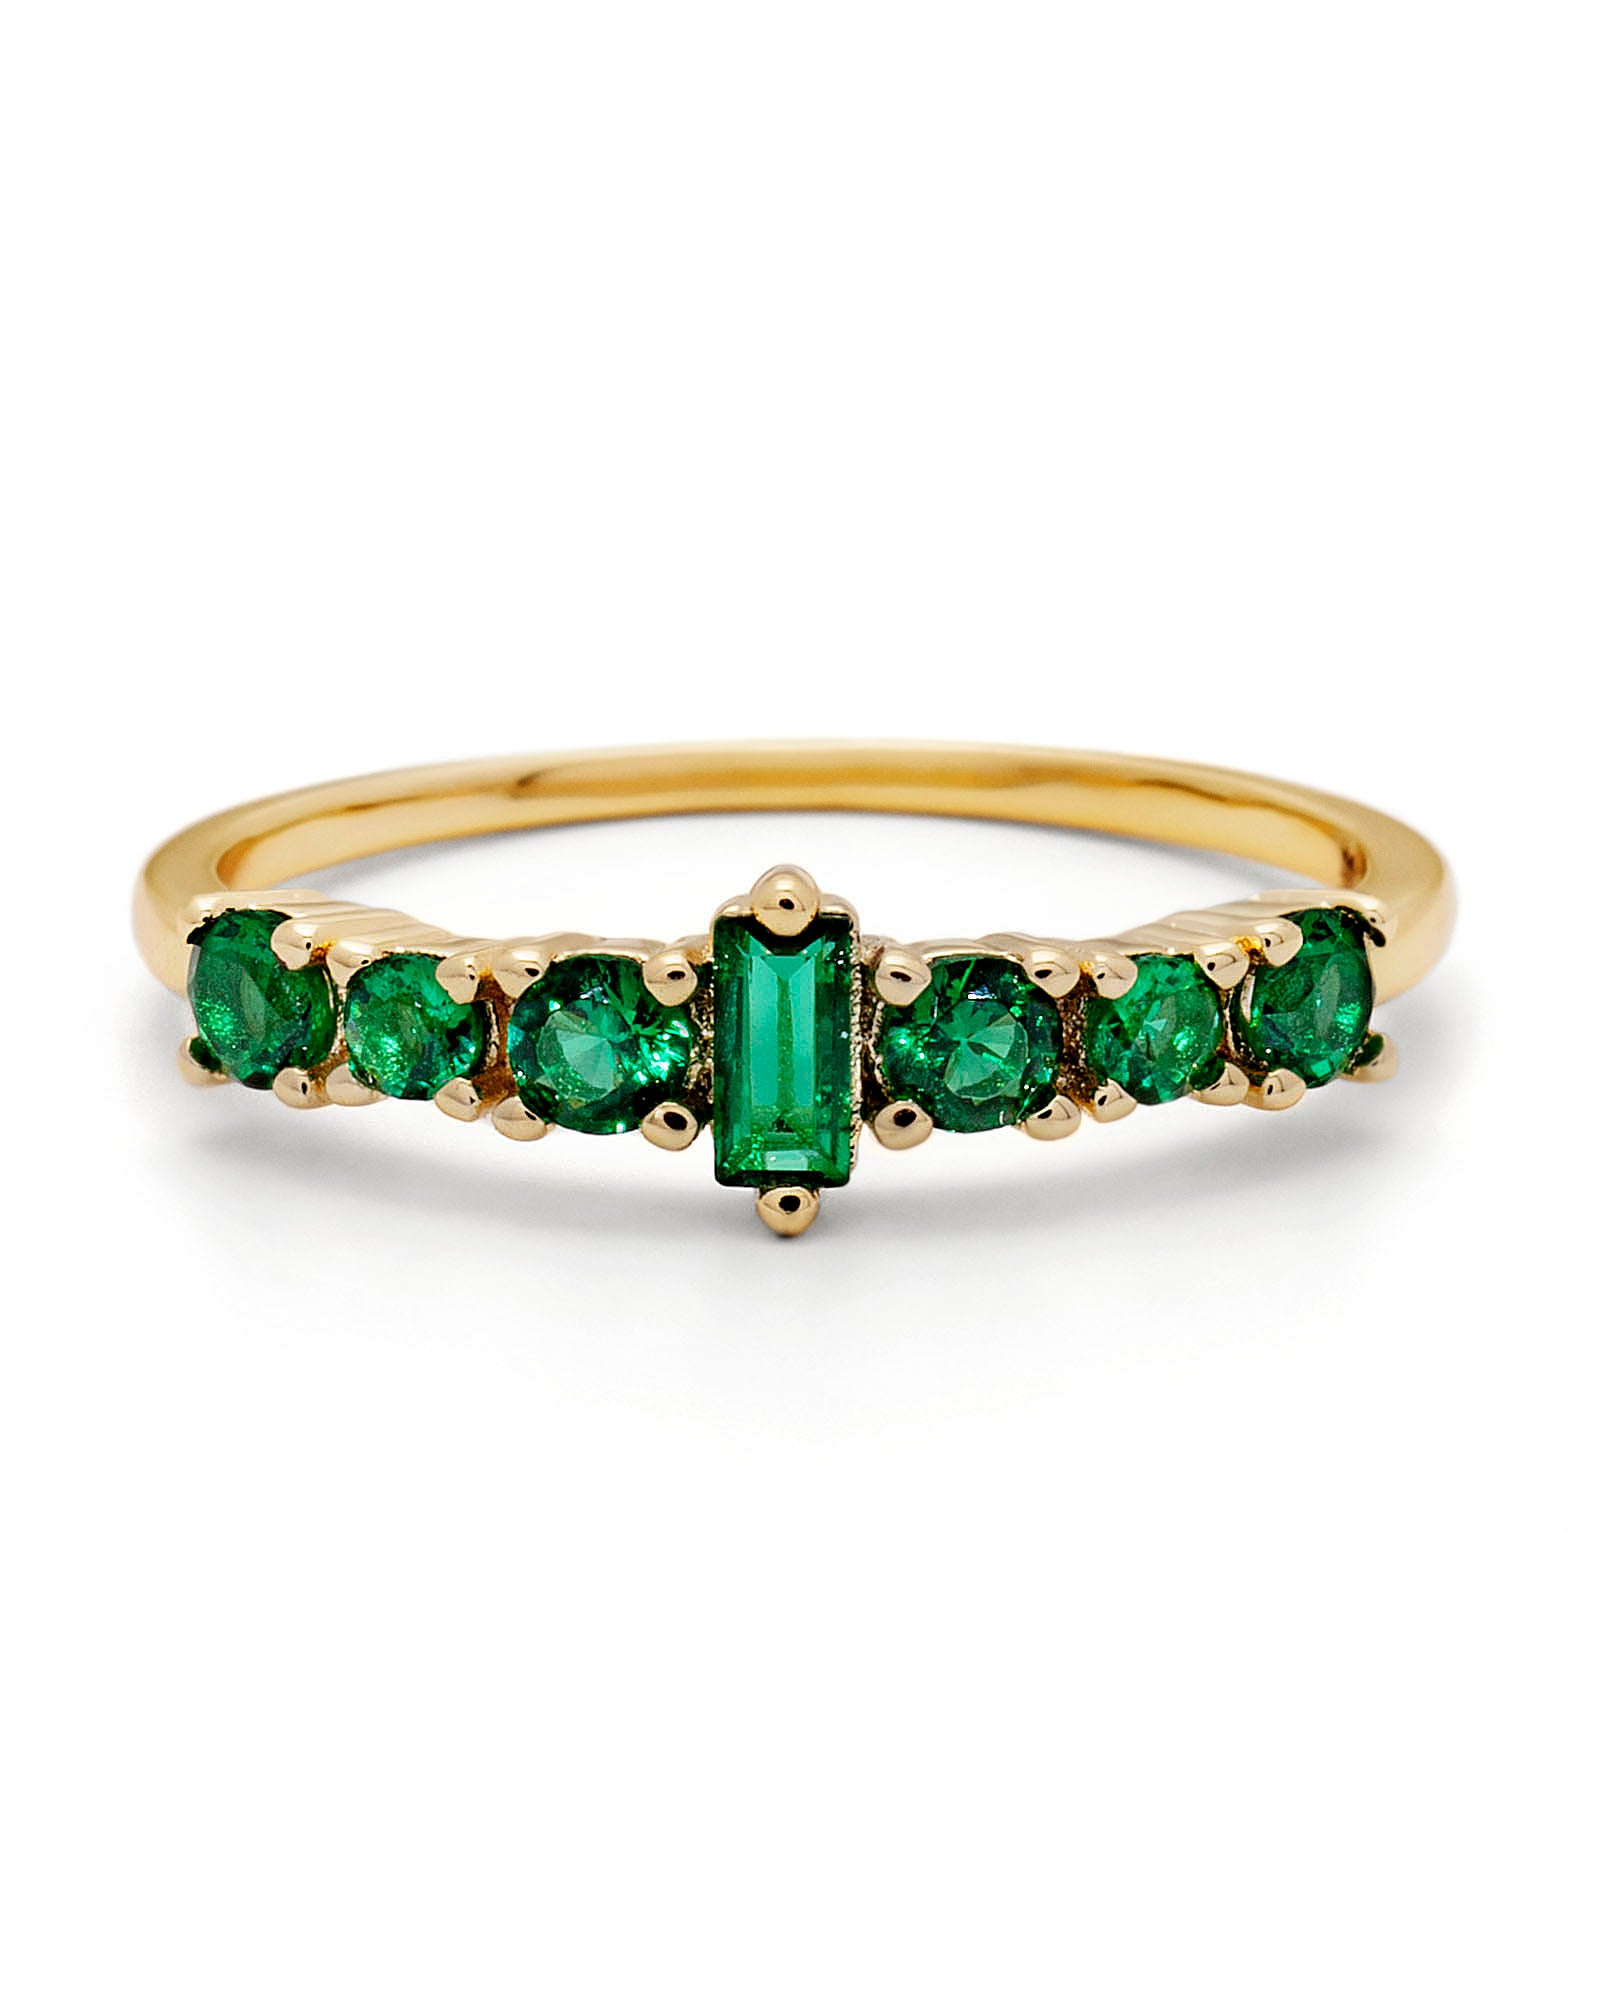 Sale! Emerald Baguette Ring